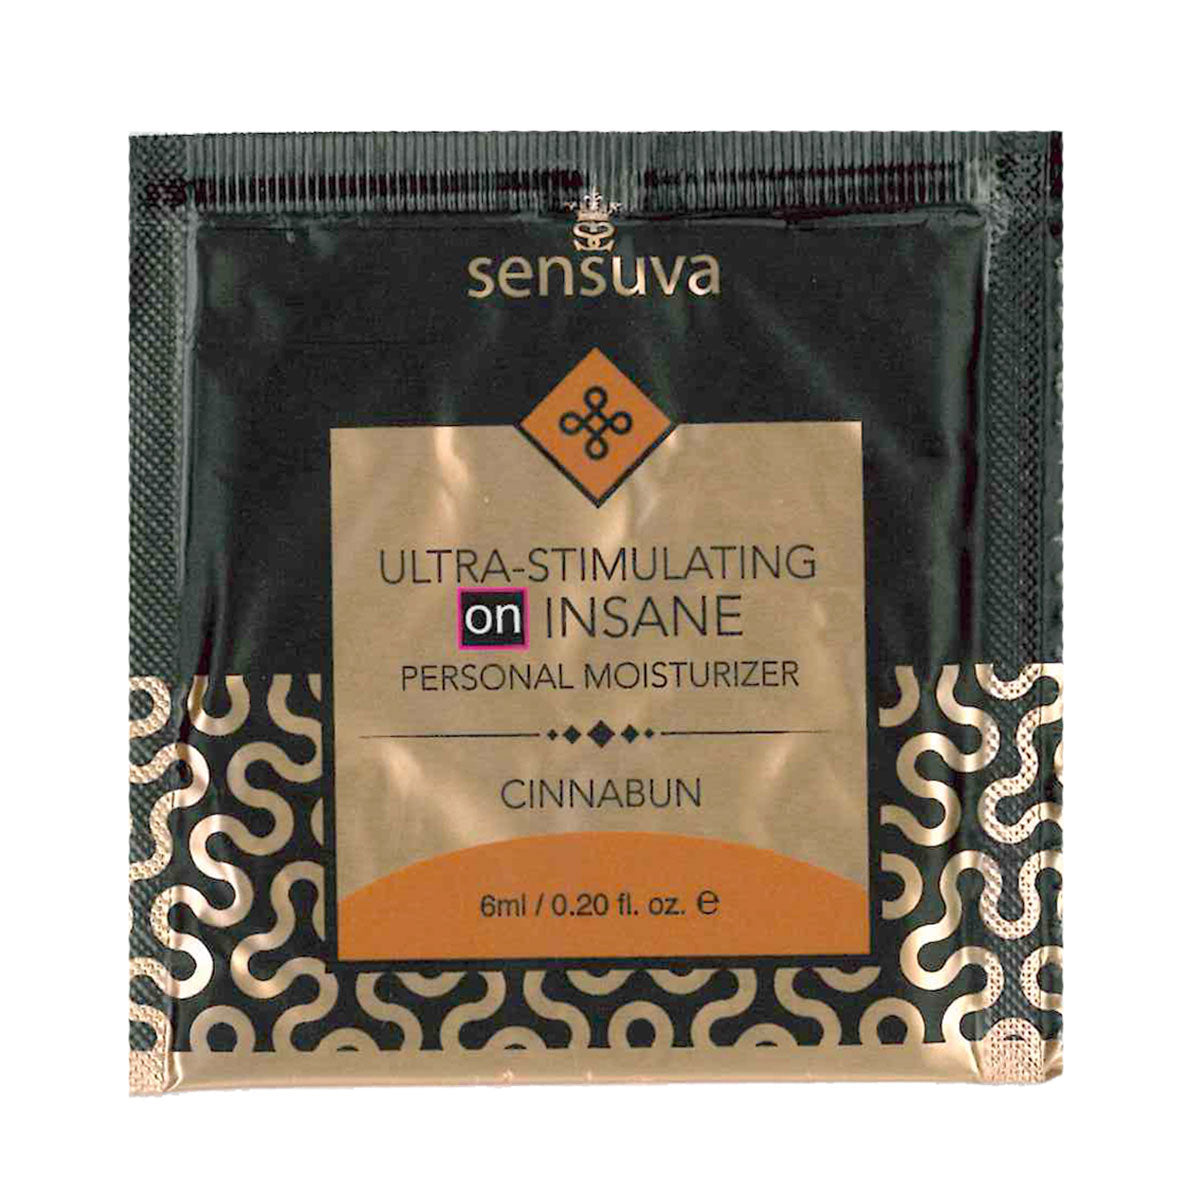 Sensuva – Ultra-Stimulating ON INSANE - Cinnabun - Foil 6ml/0.20 fl oz.